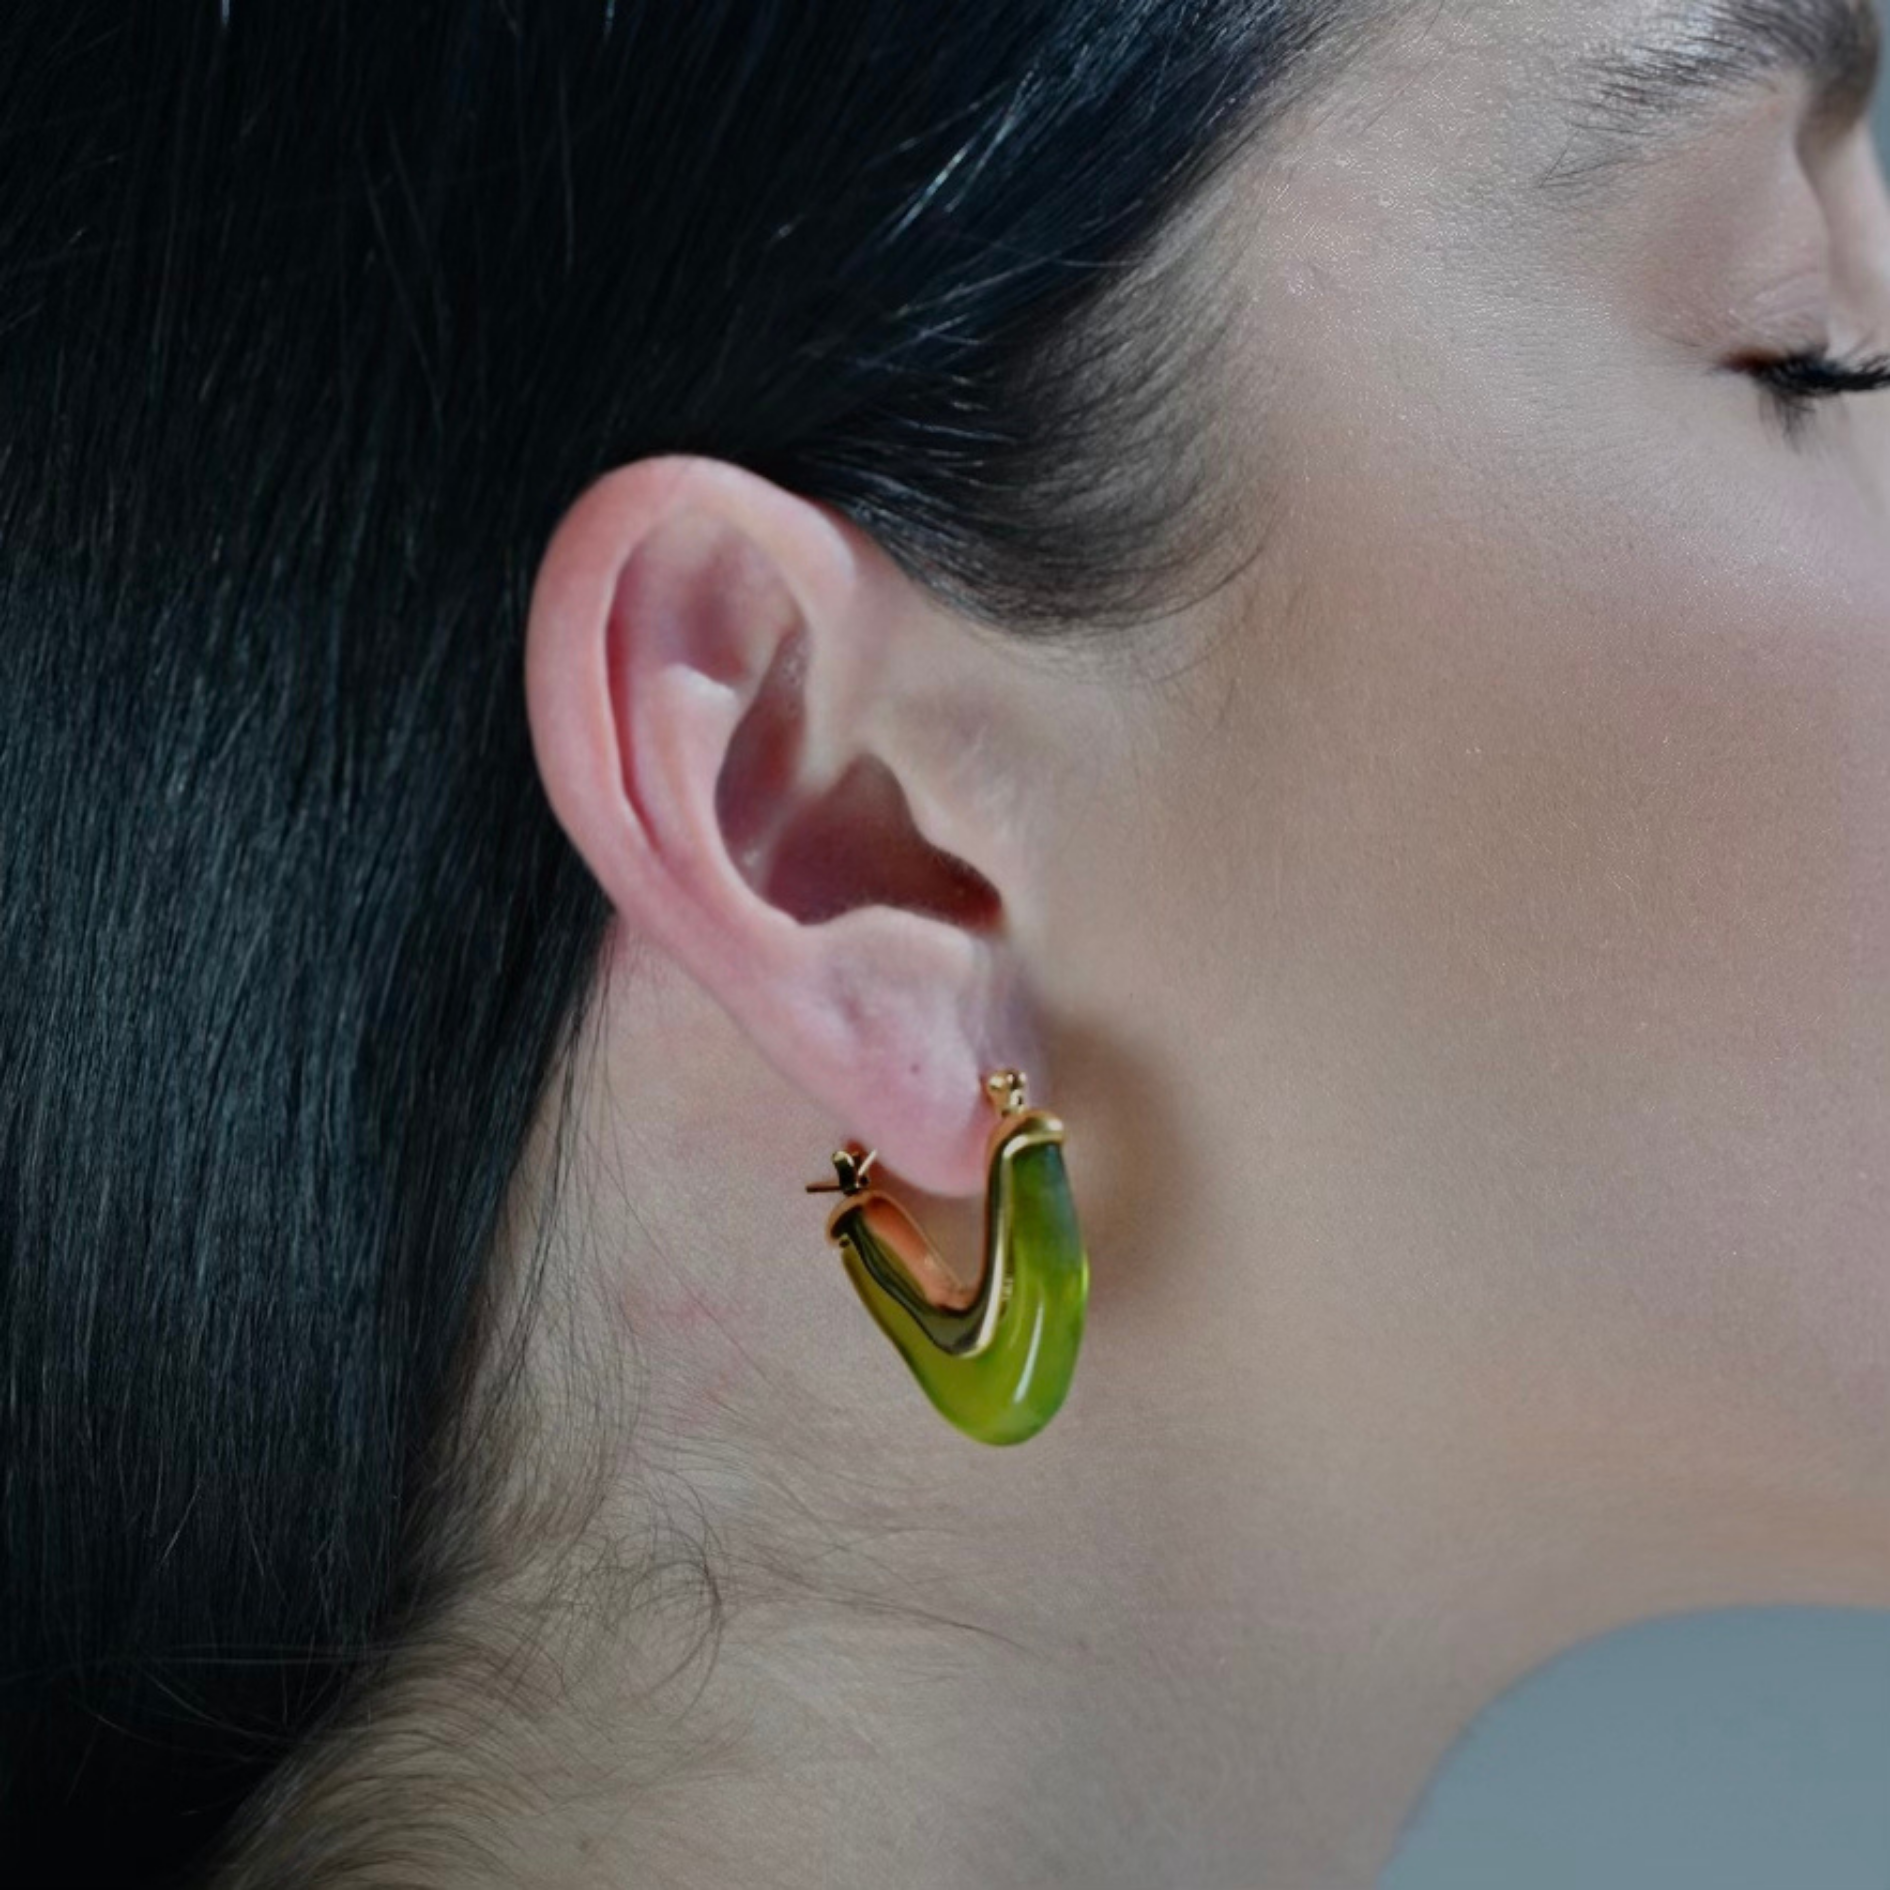 Model wearing a V shape Gold Plated Hoop Earrings made with Green Acrylic. Waterproof Earrings.